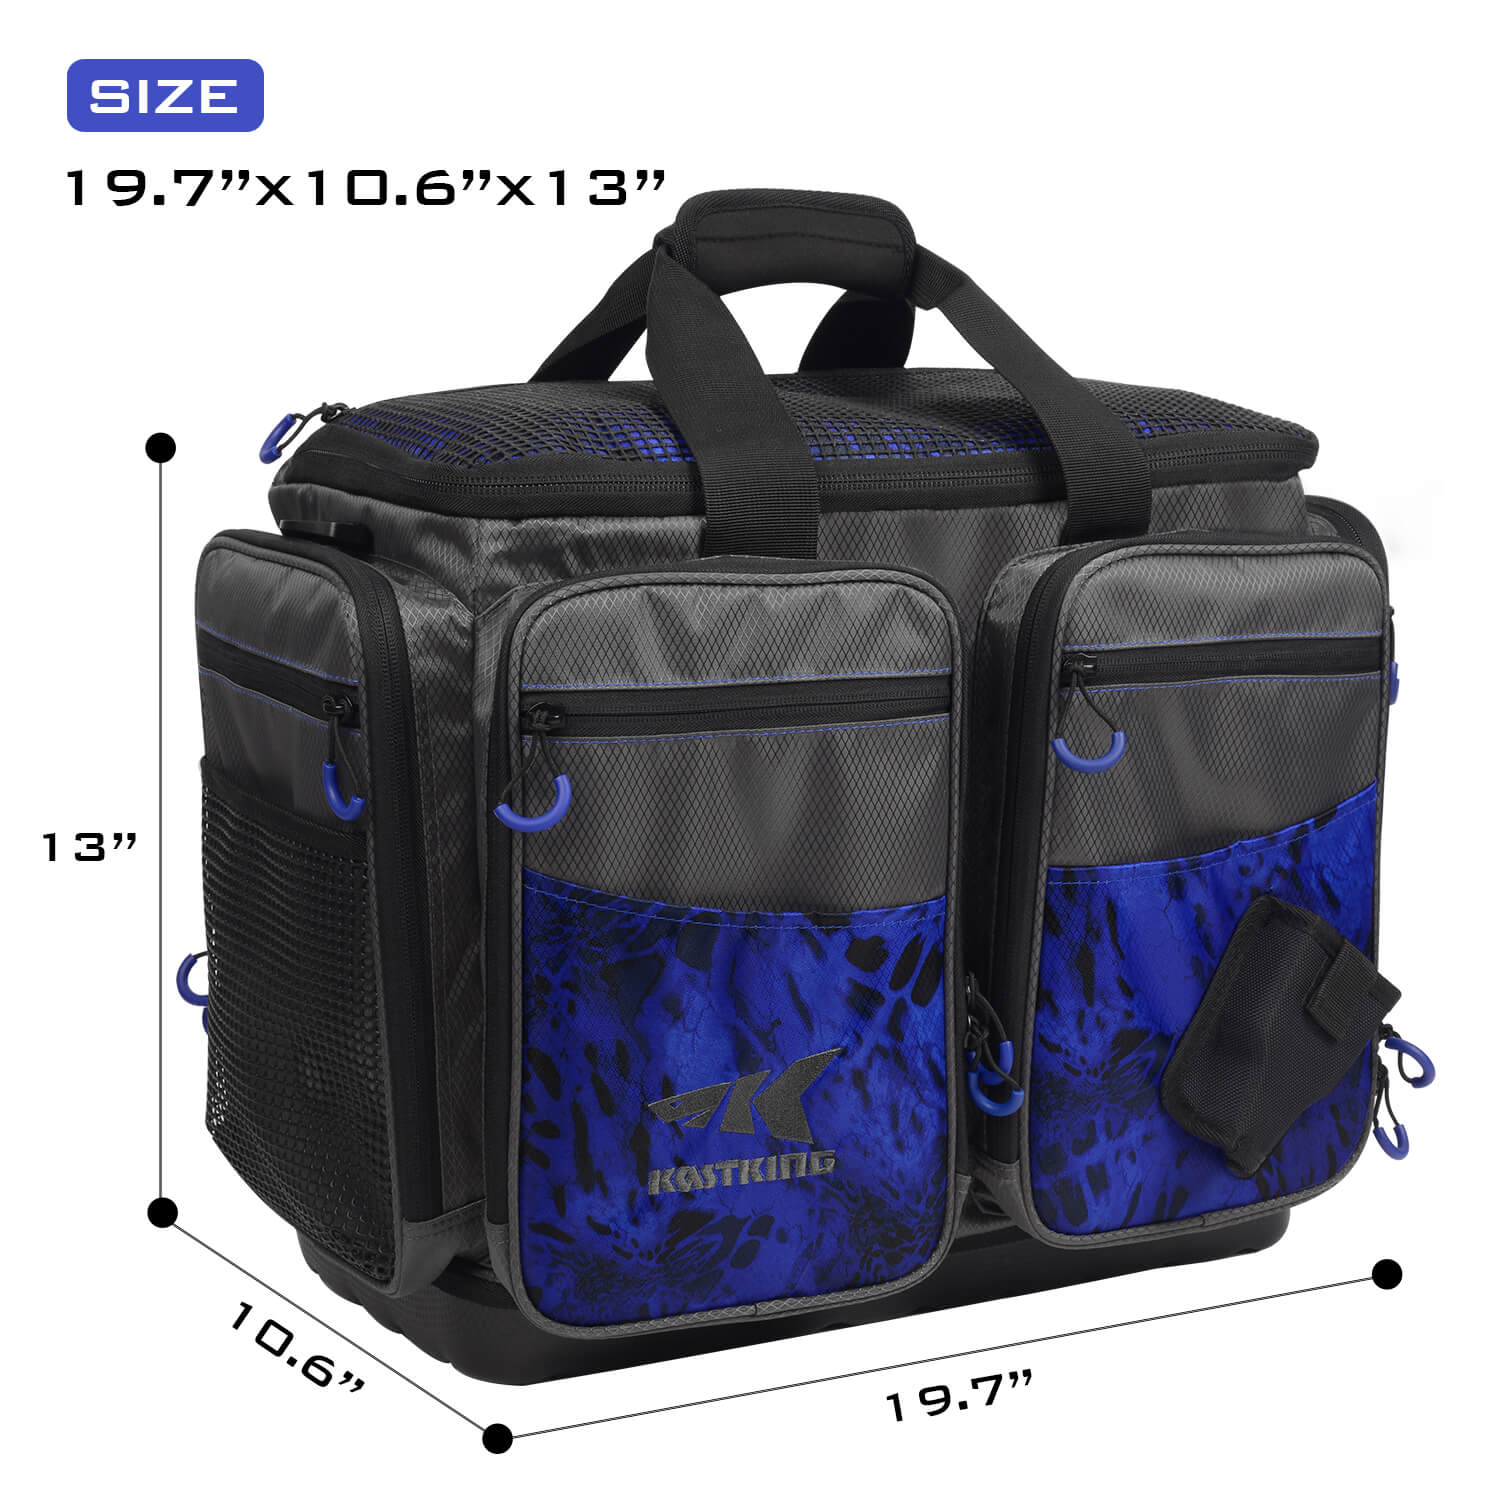 KastKing Fishing Tackle Bags - Lunker (19.7” x 13” x 10.6”) / Blue Patriot